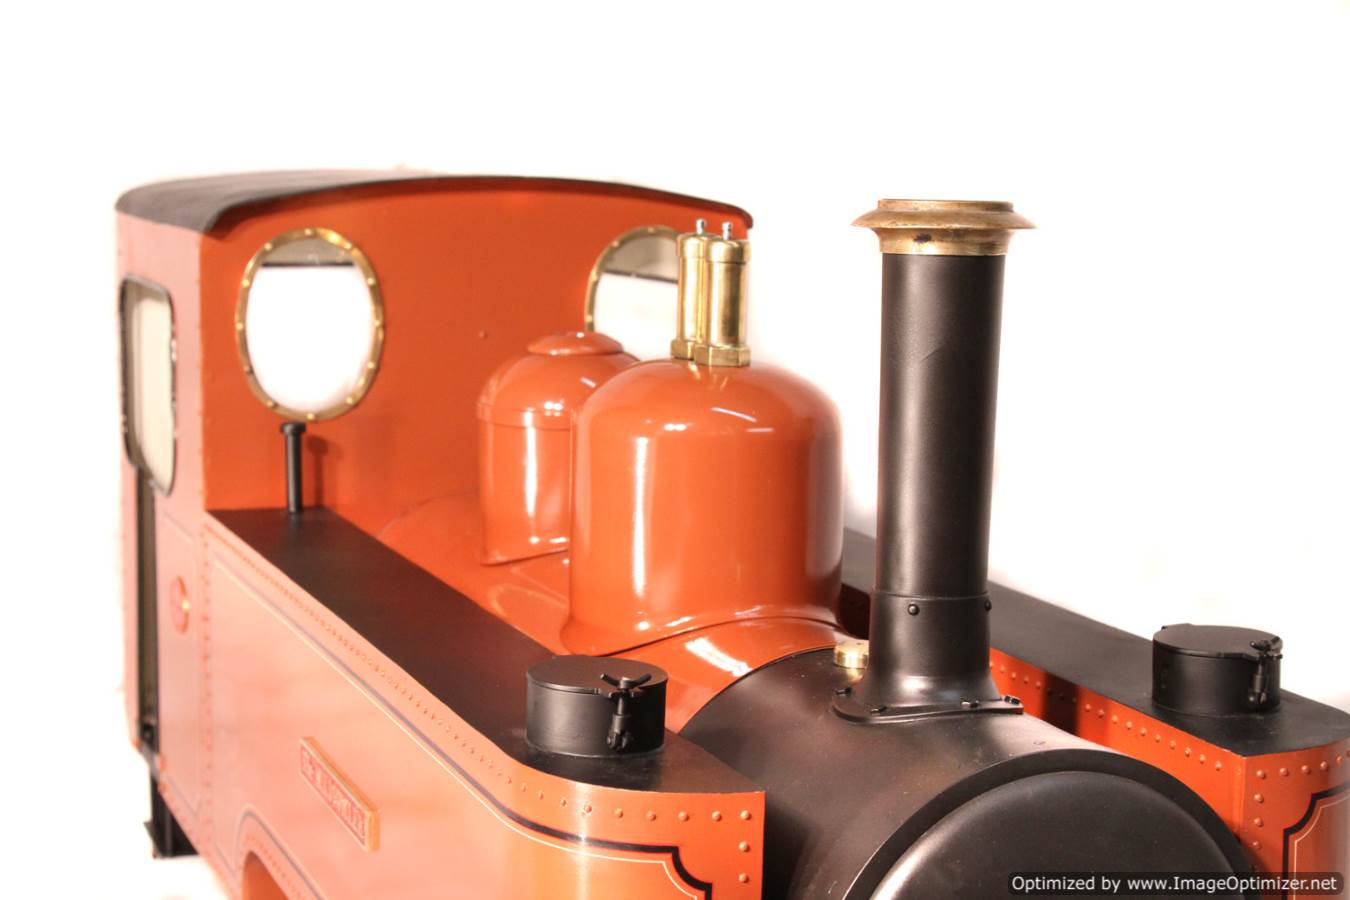 test 5 inch Gauge Fowler Live Steam Locomotive for sale 07 Optimized